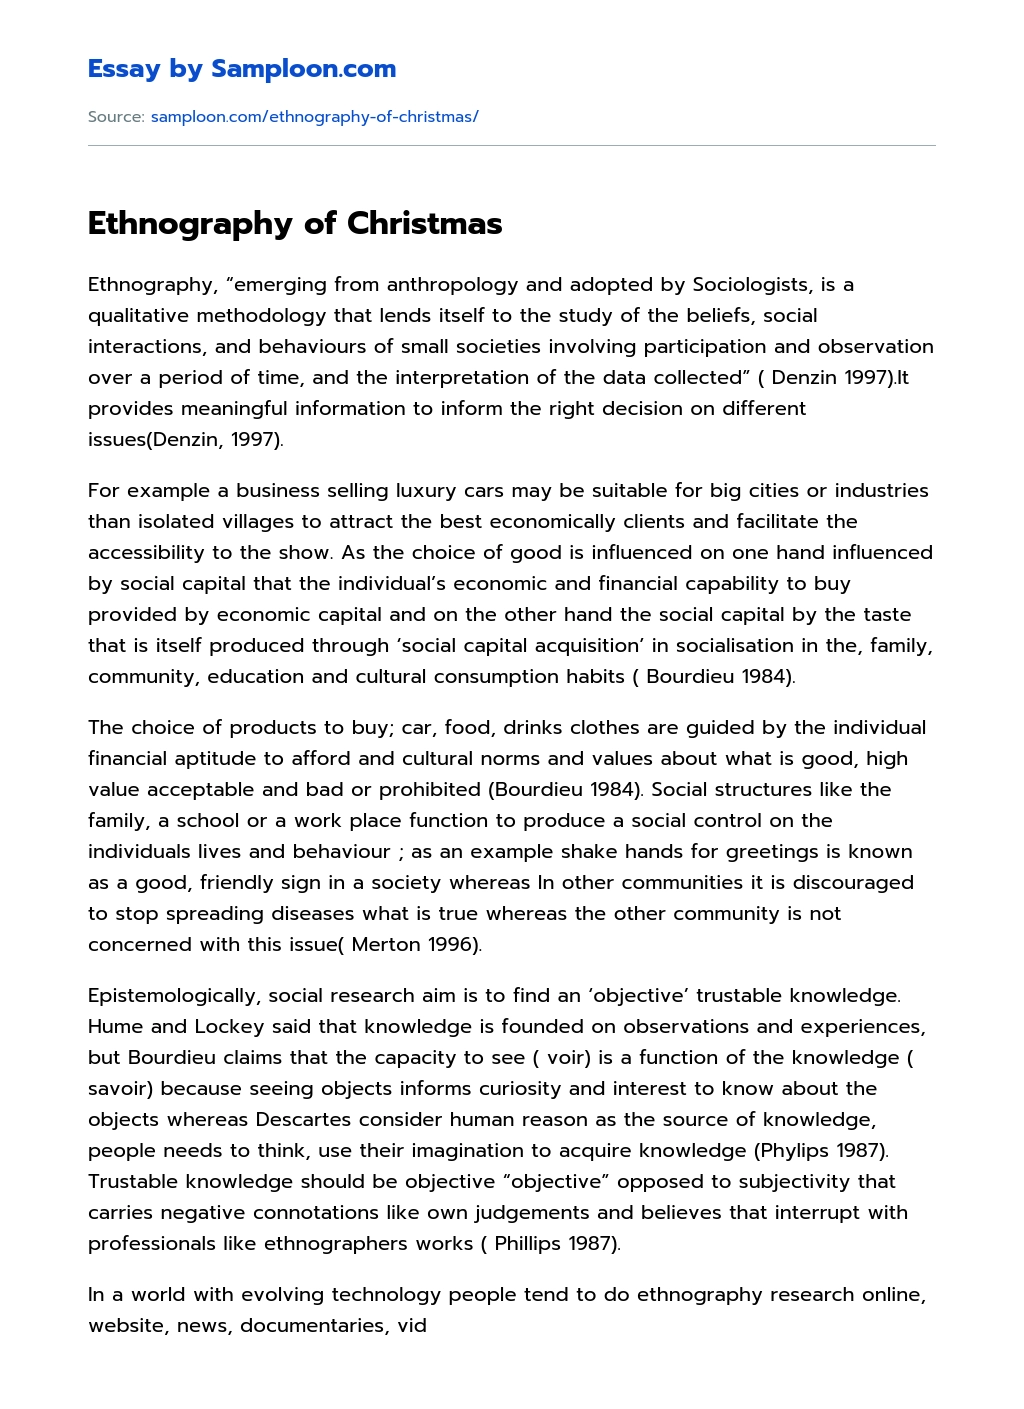 Ethnography of Christmas essay